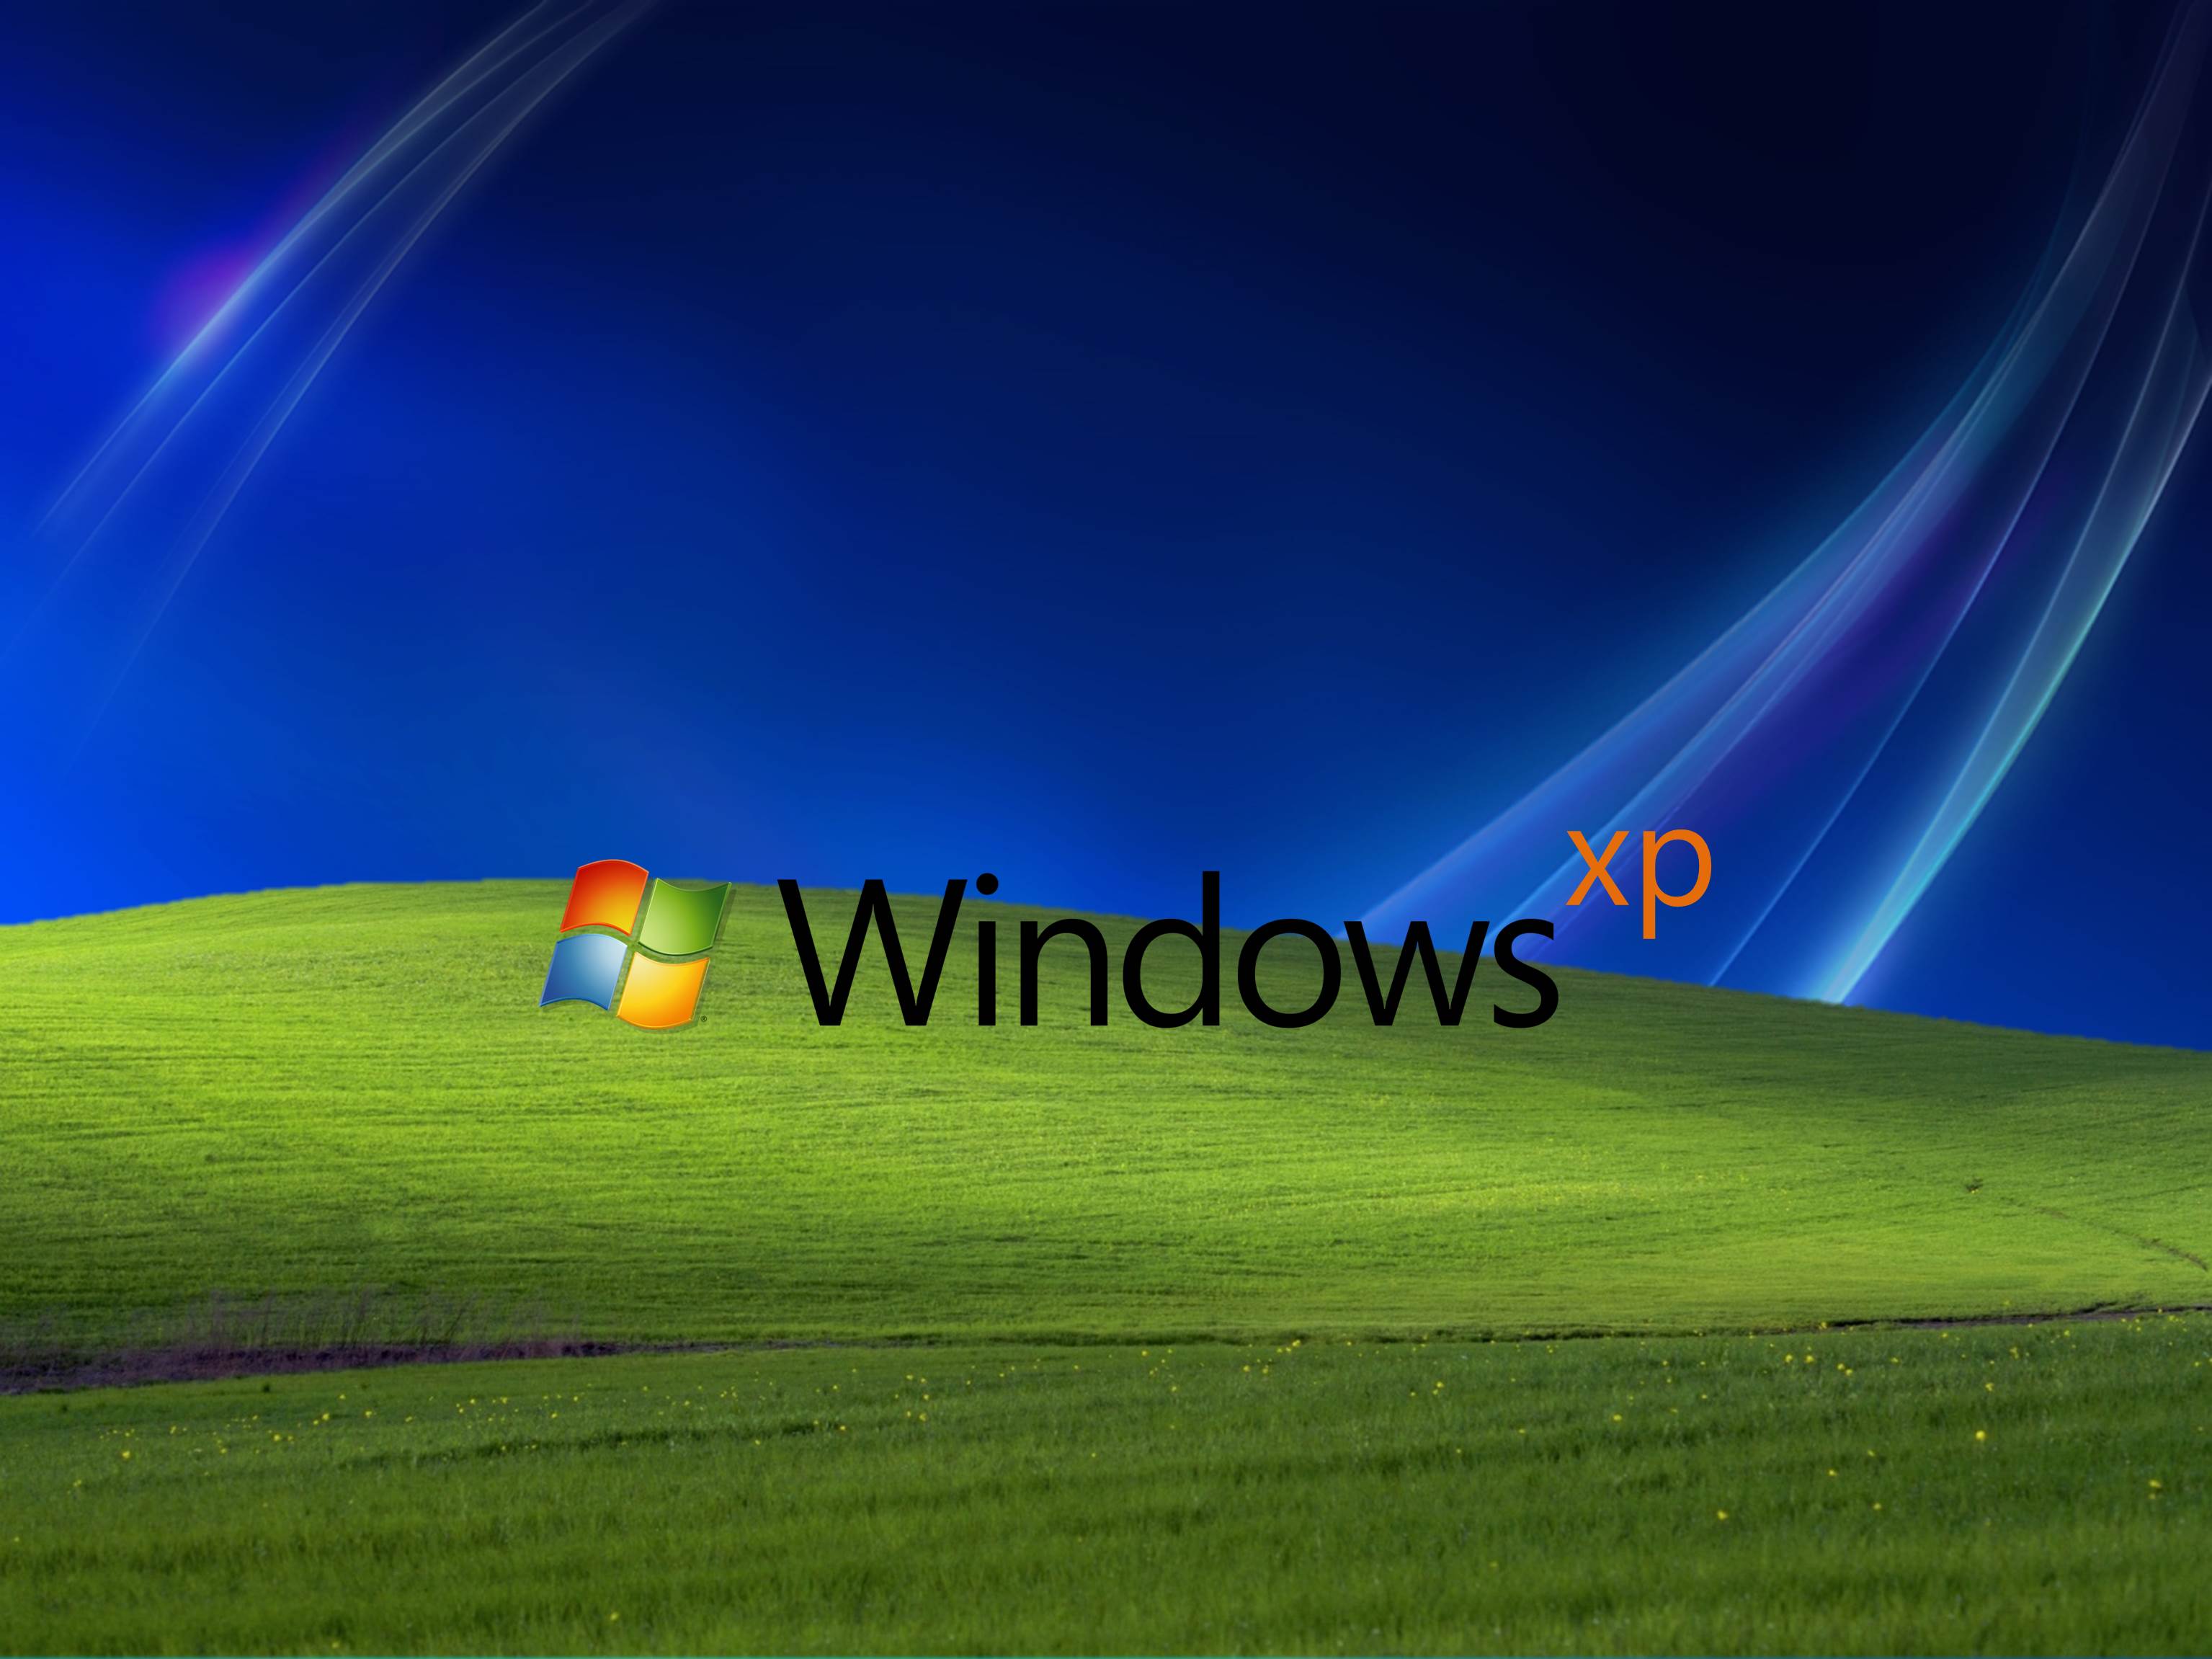 HD Wallpaper for Windows XP Wallpaper Inn